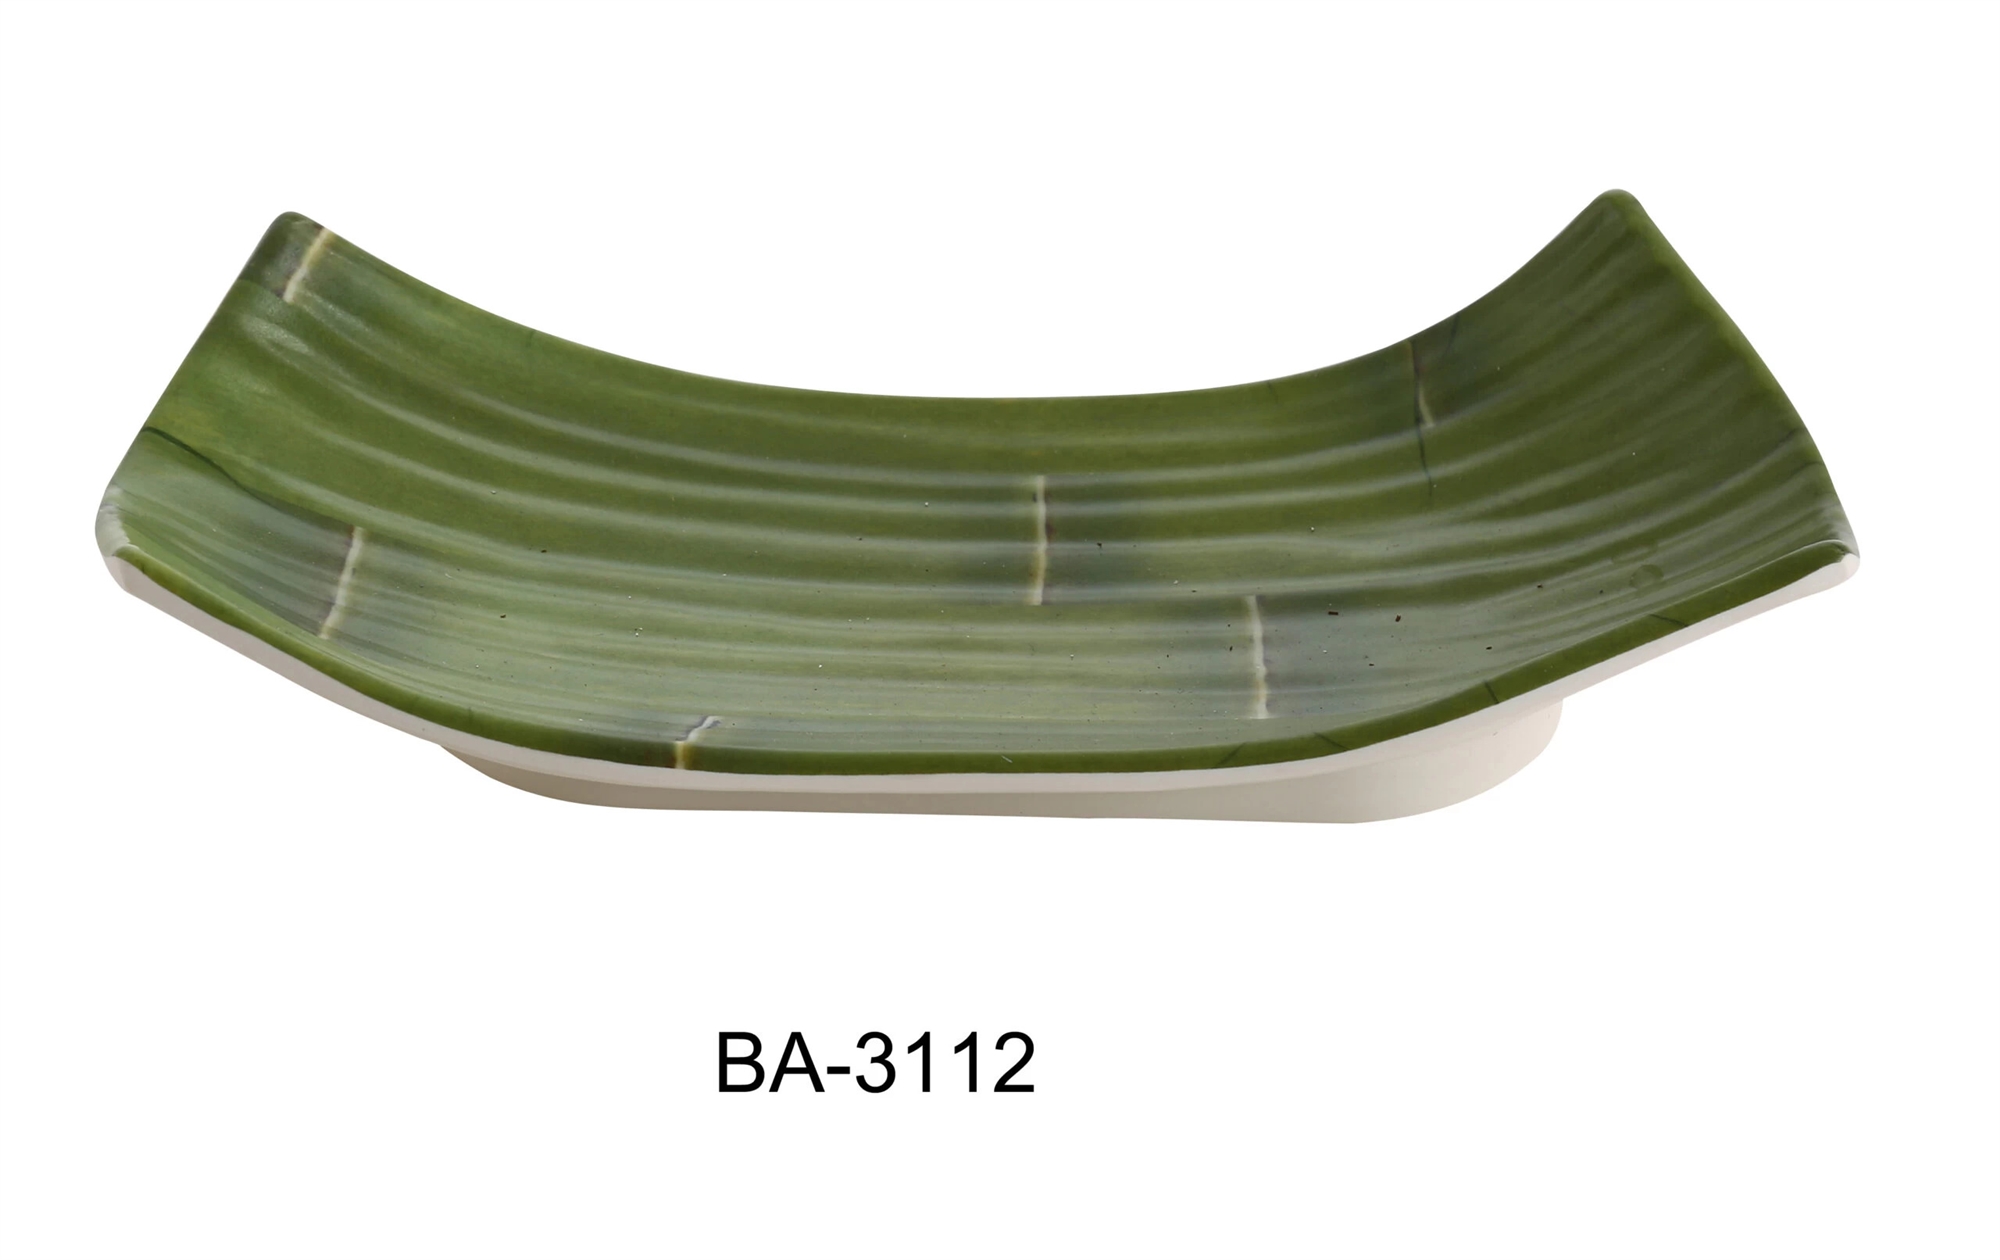 Yanco BA-3112 Bamboo Style 11.5â€³ X 4.75â€³ Deep Plate